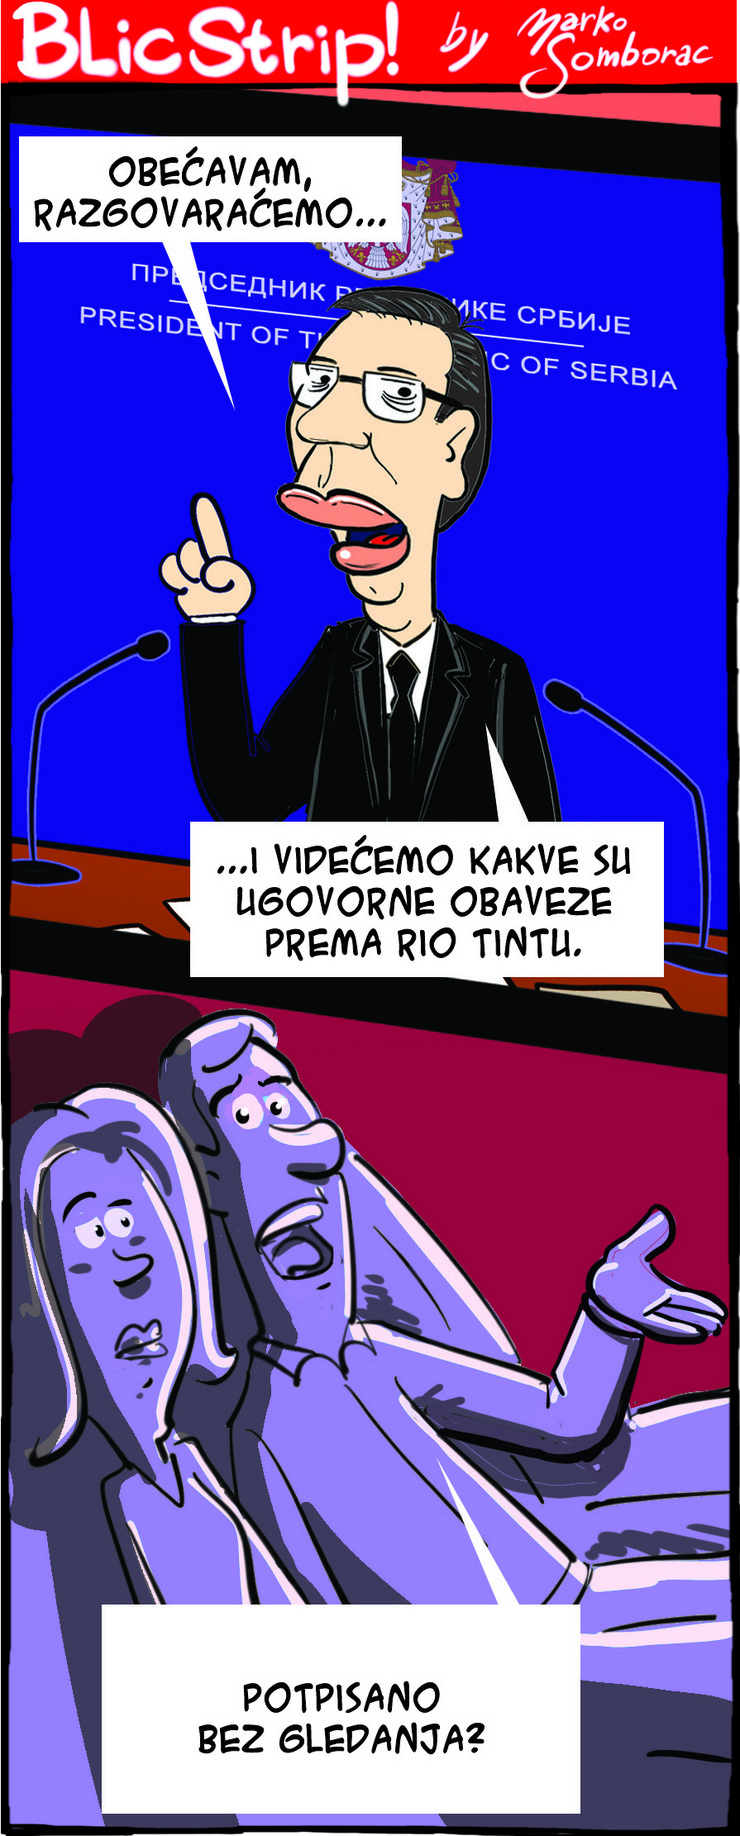 Blic Strip Marka Somborca